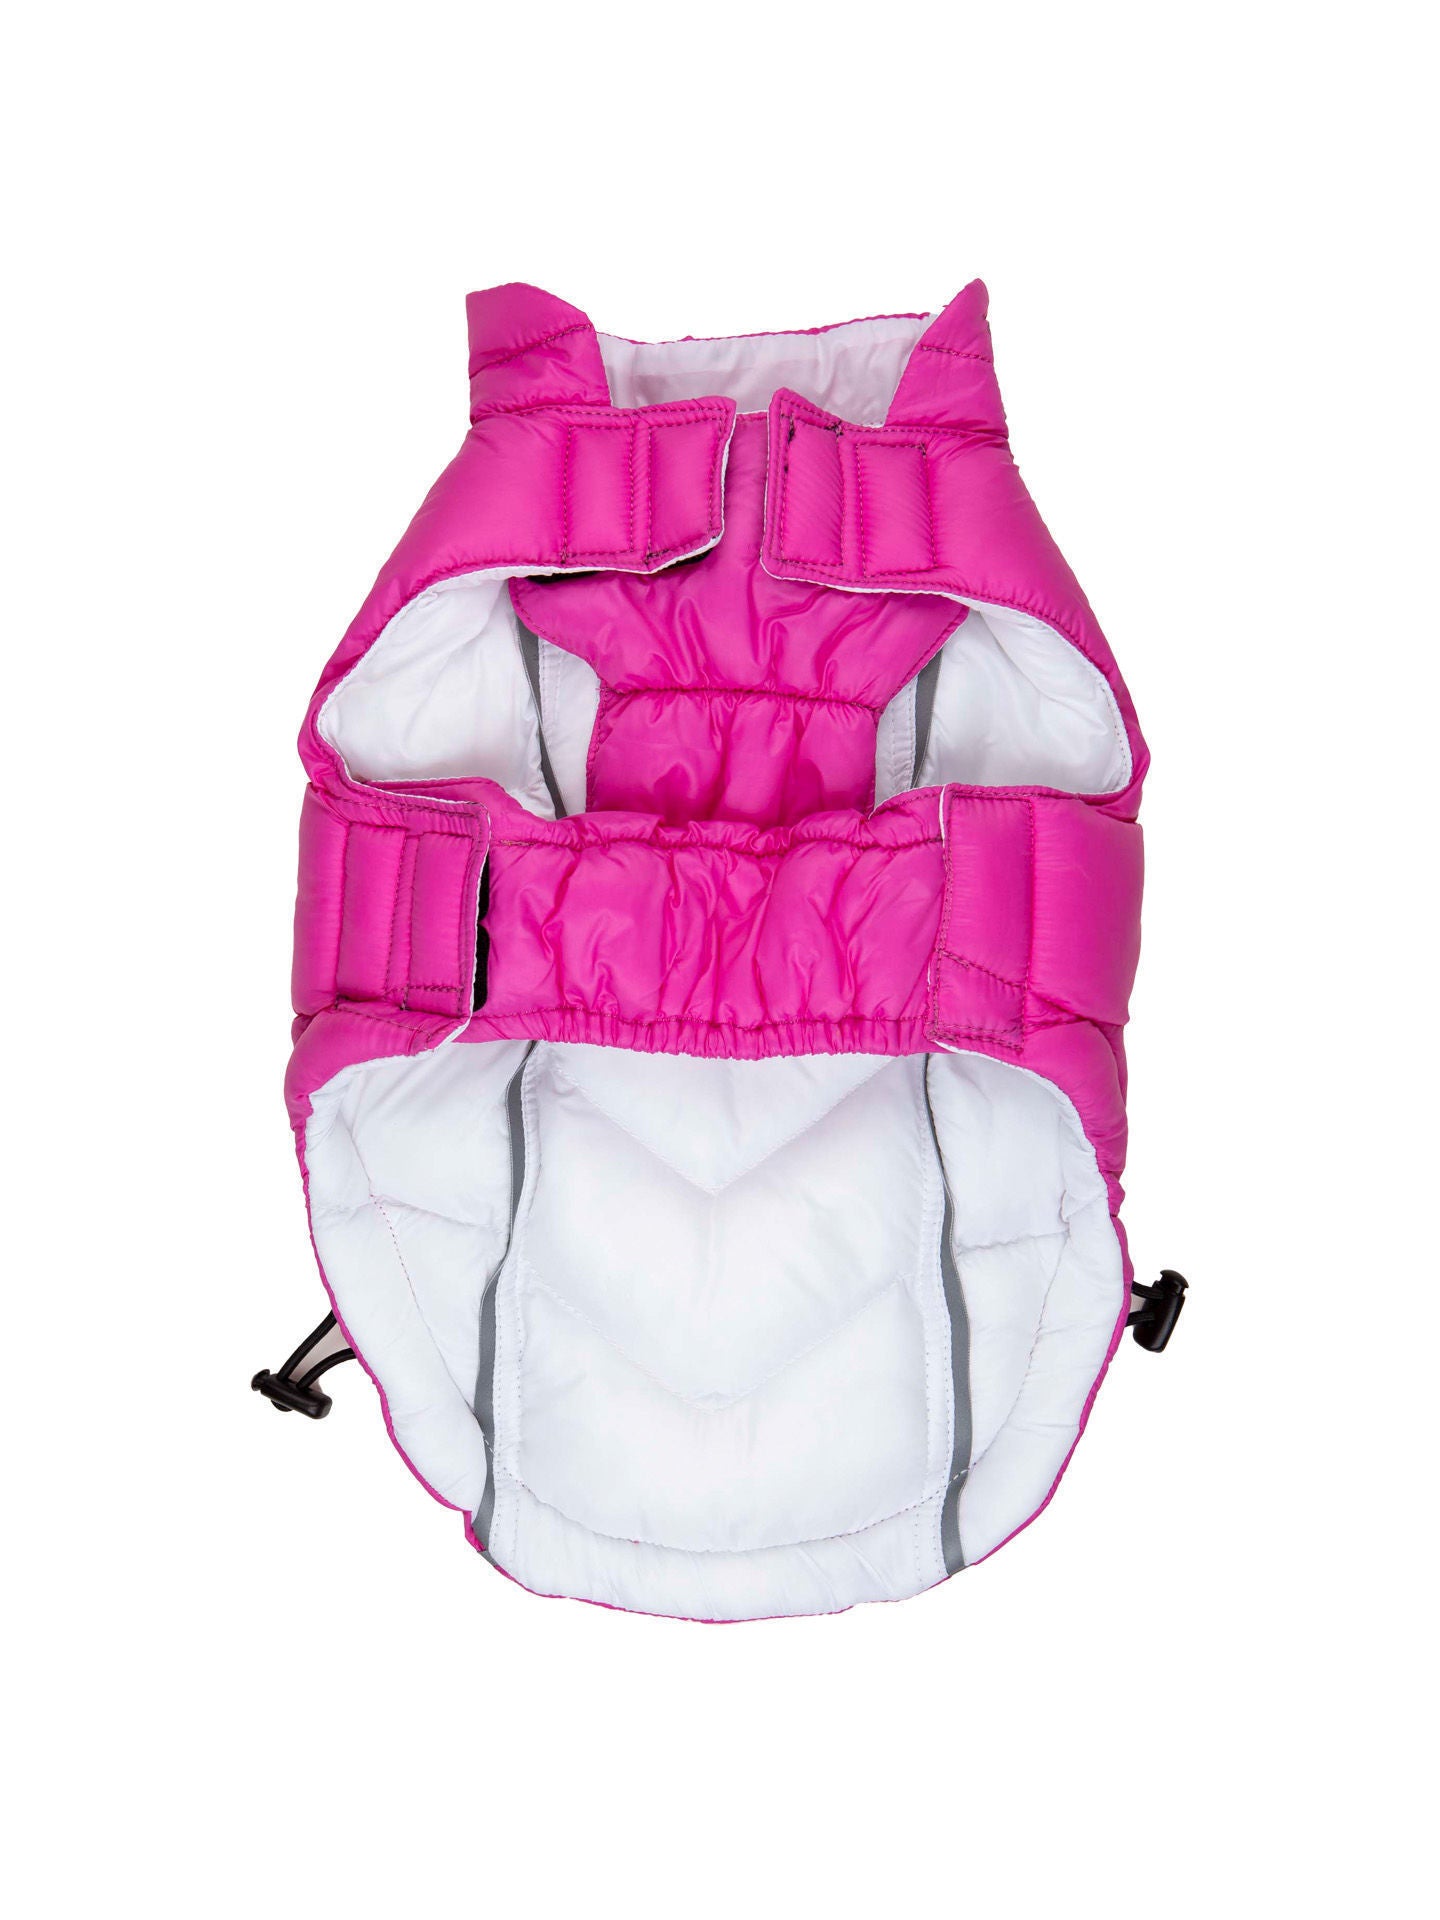 Barker's Bowtique - Puffer Vest Featherlite Reversible Pink & White